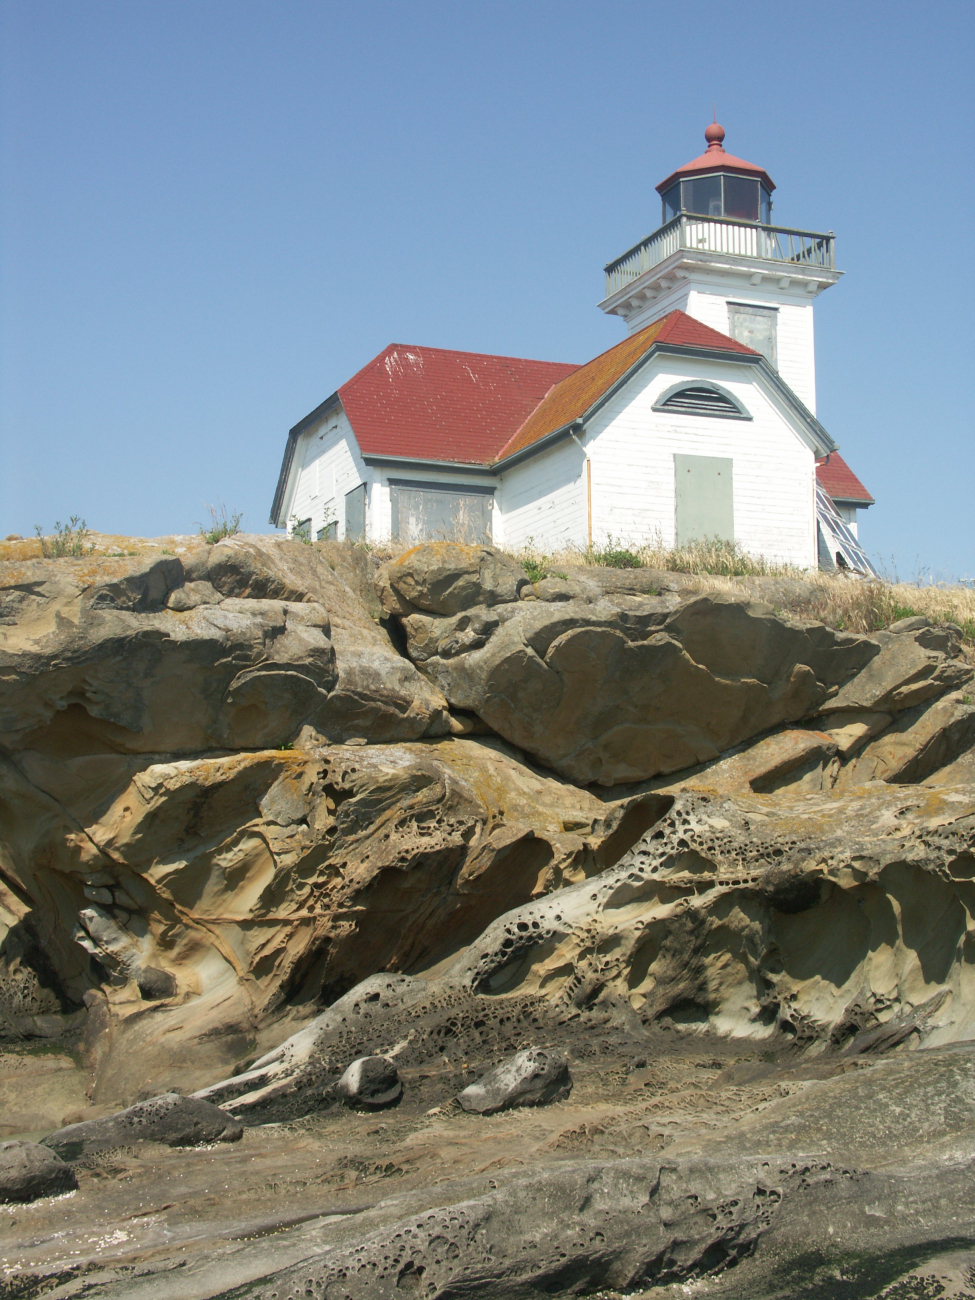 Patos Island Lighthouse